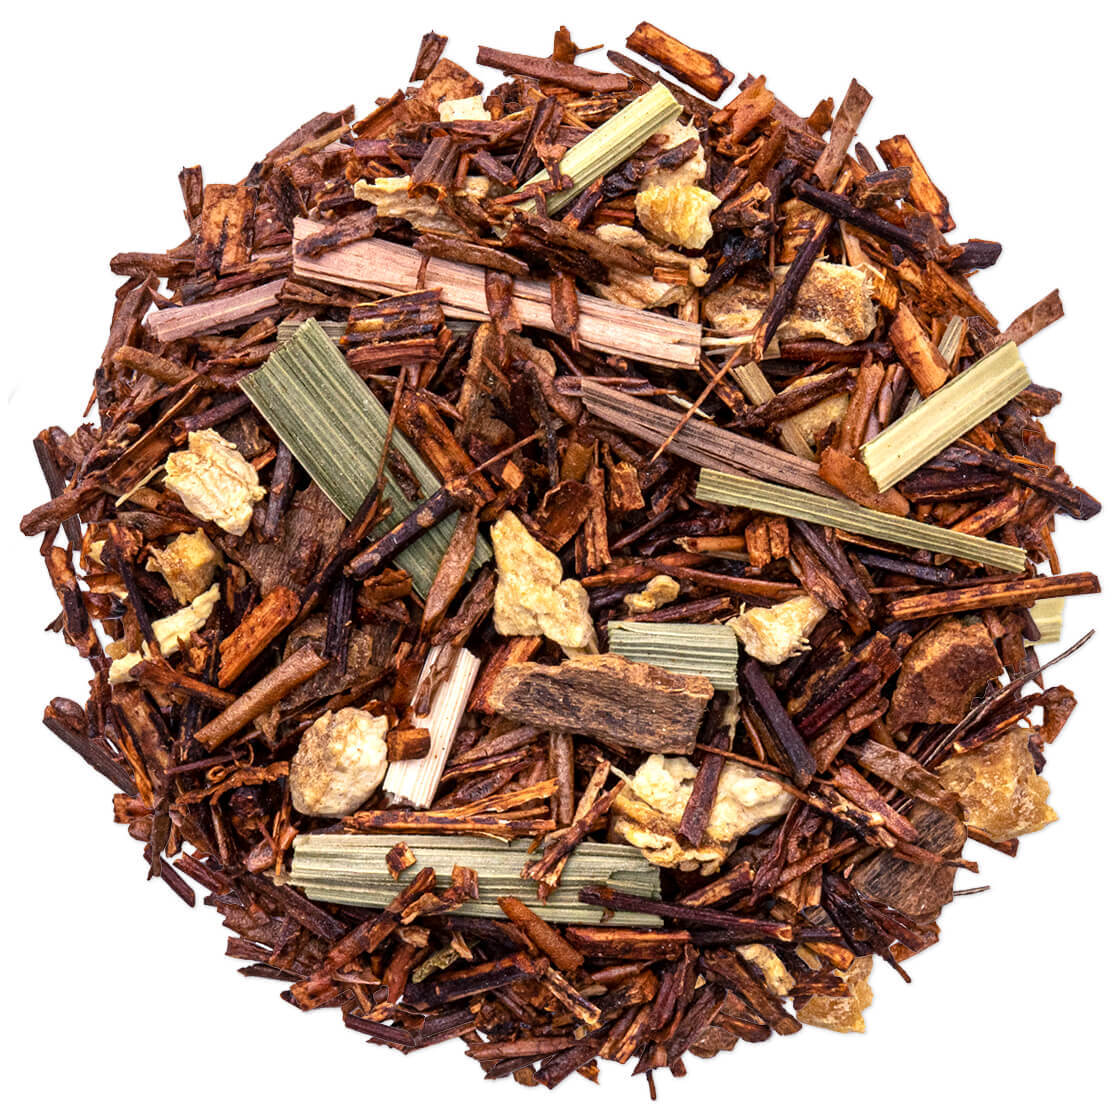 Winter Chai Loose Leaf Tea Canister, Best Herbal Tea